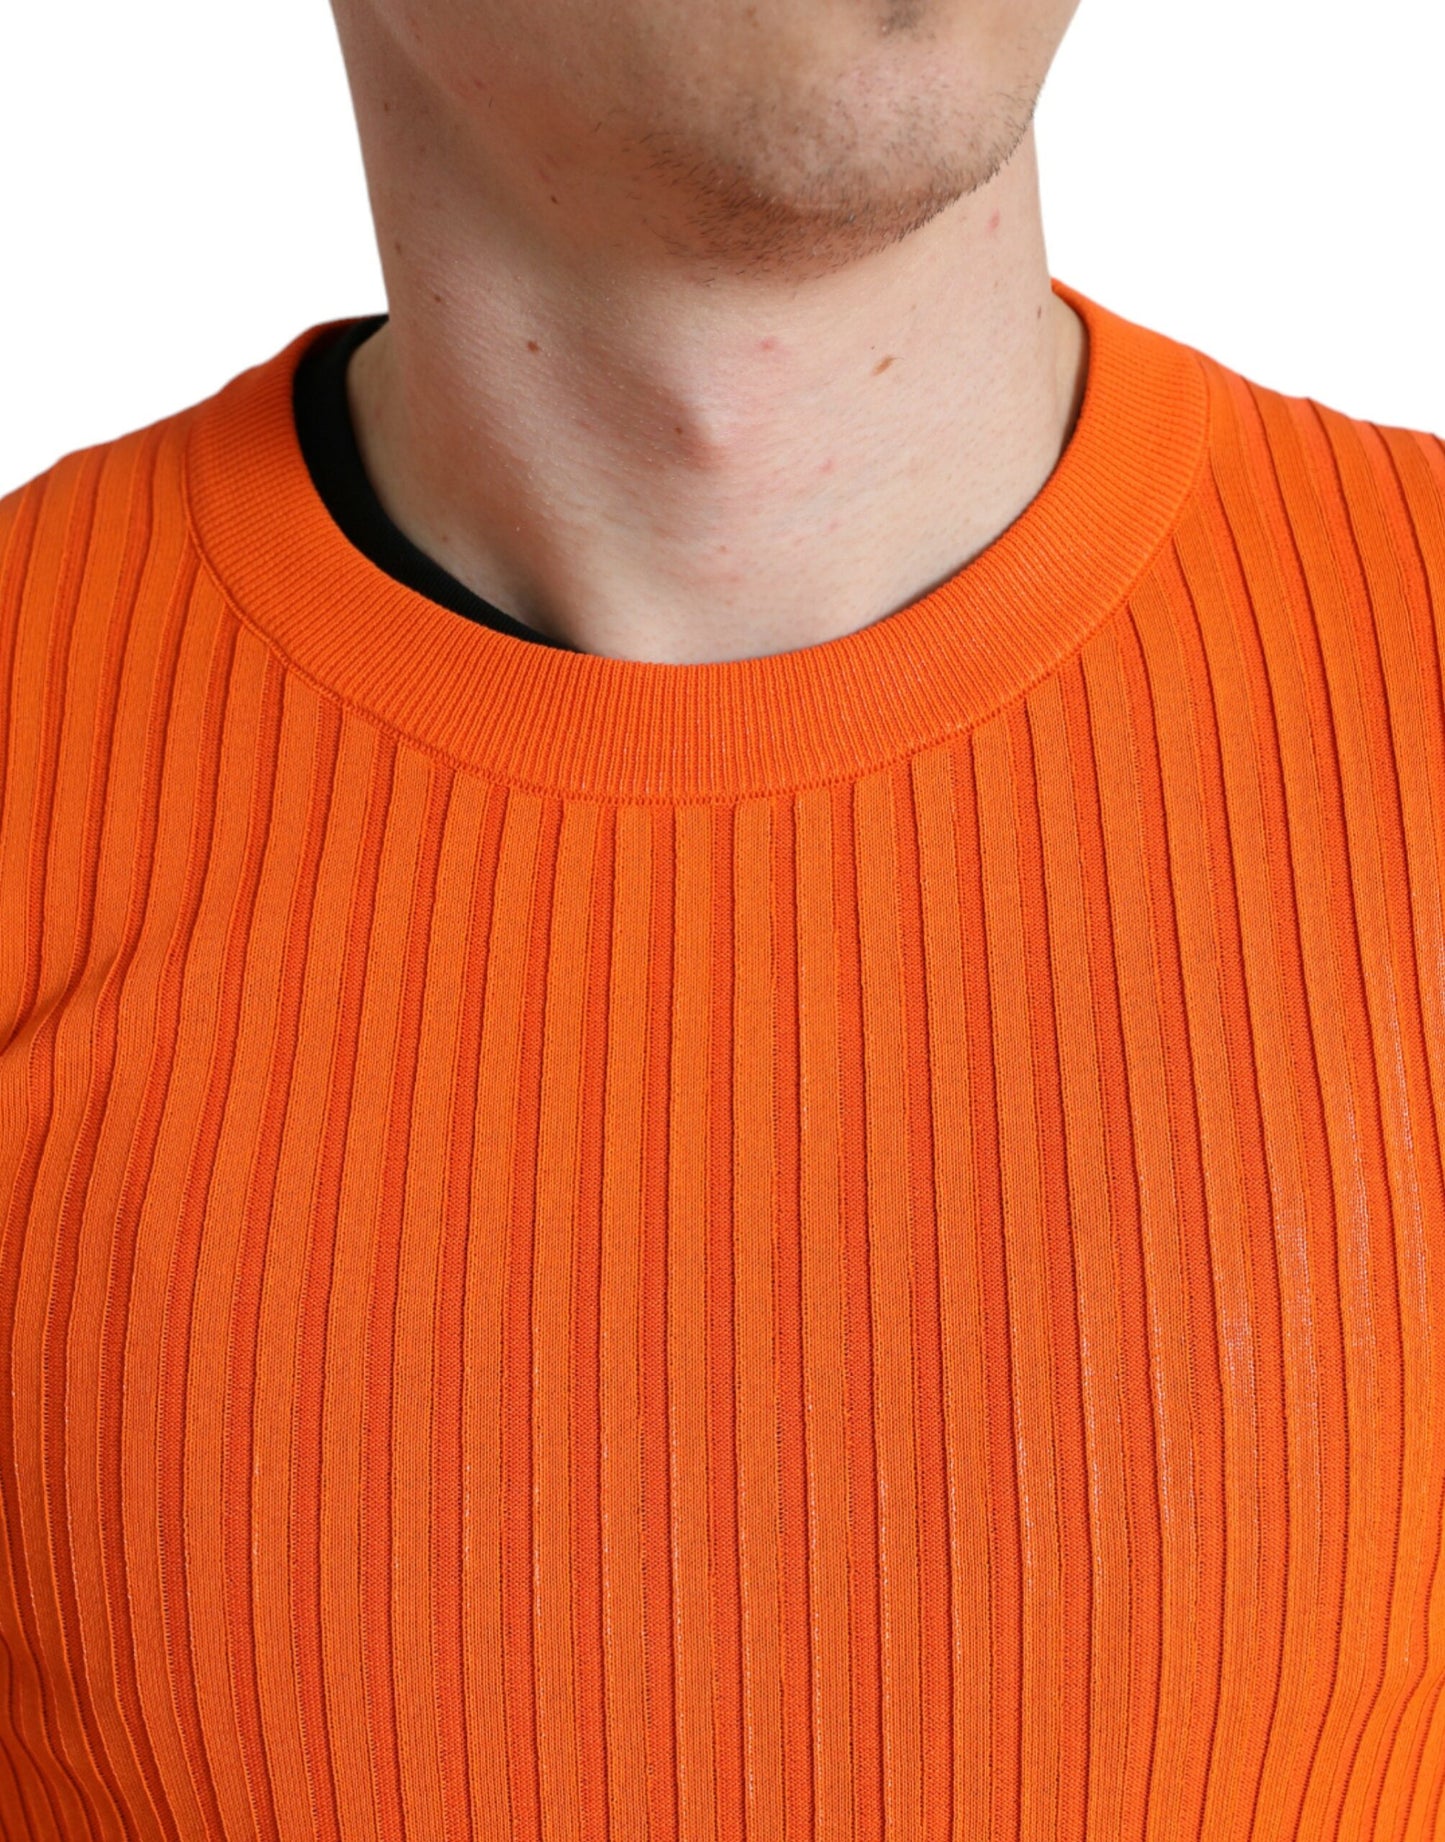 Sleek Sunset Orange Knitted Pullover Sweater